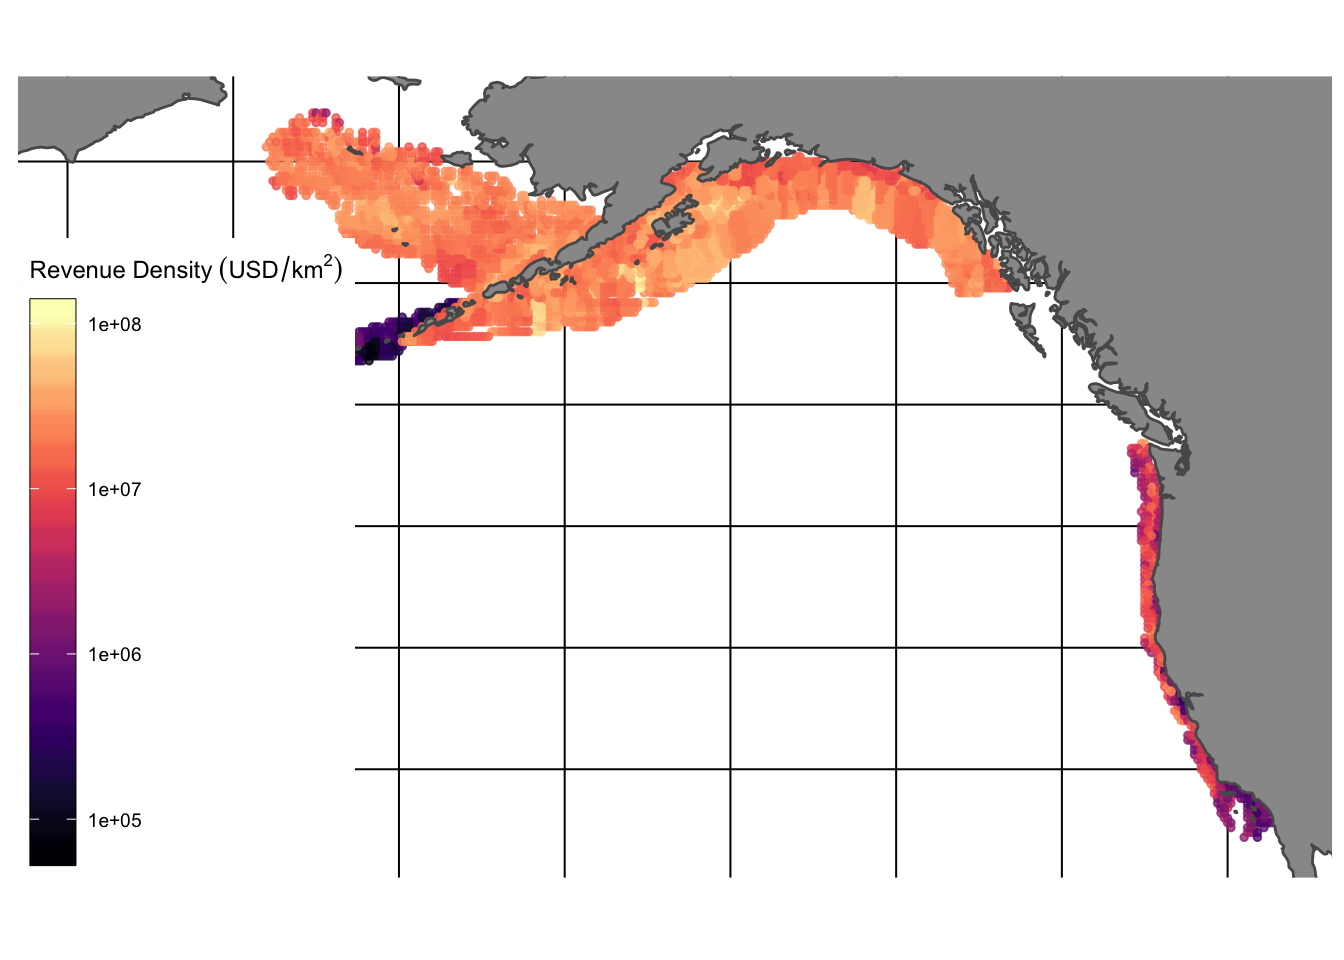 Estimated fishing revenue density ($/km^2)